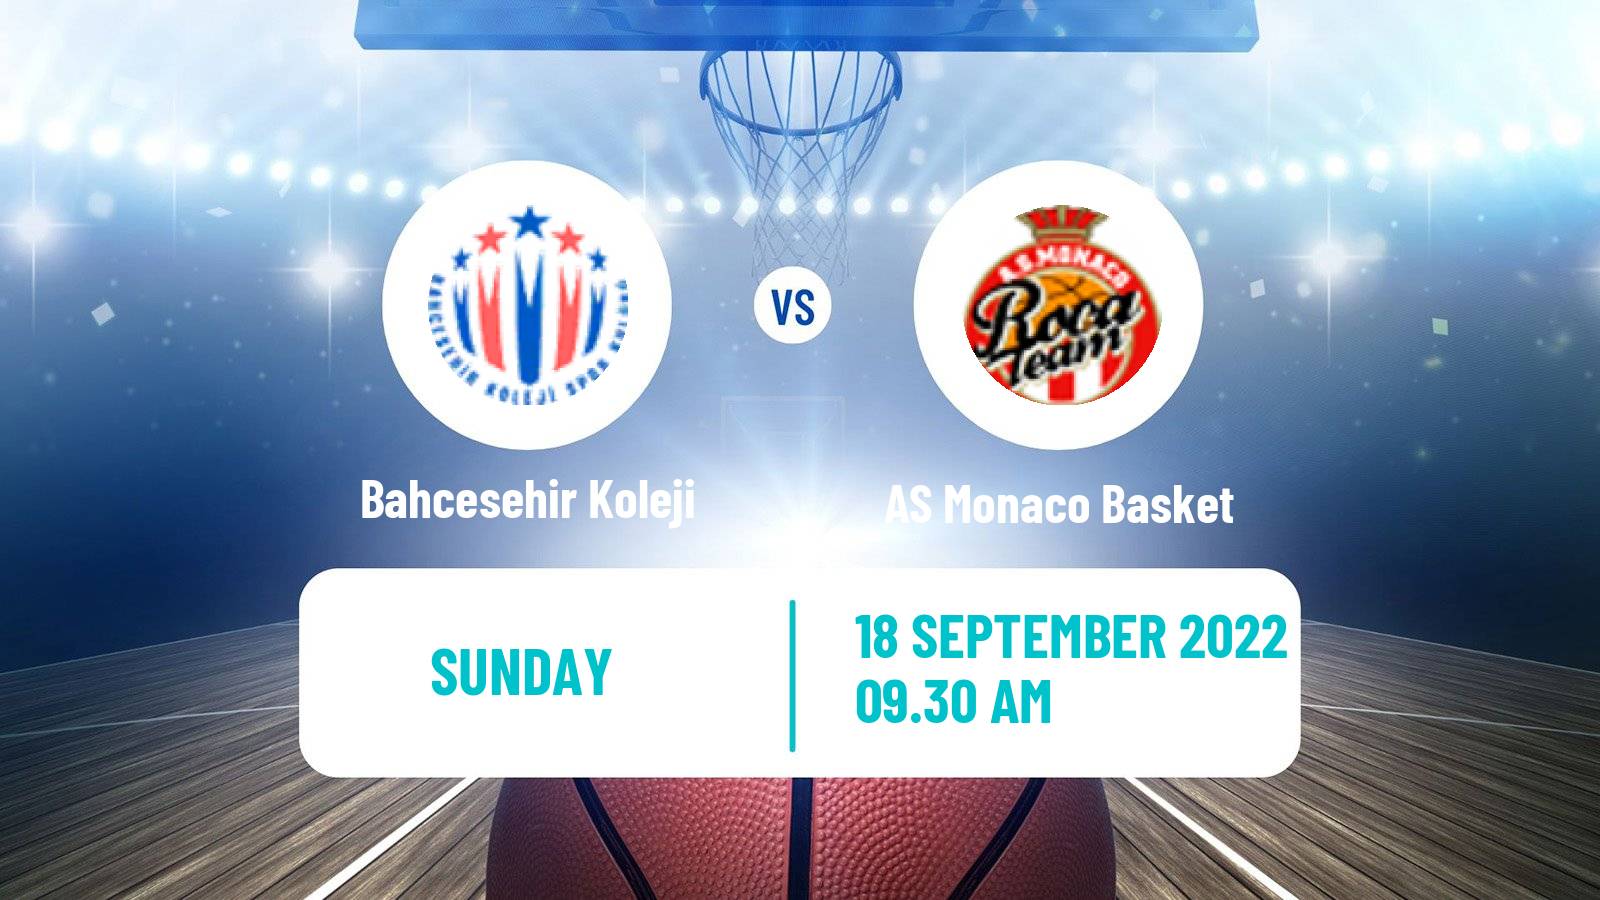 Basketball Club Friendly Basketball Bahcesehir Koleji - AS Monaco Basket